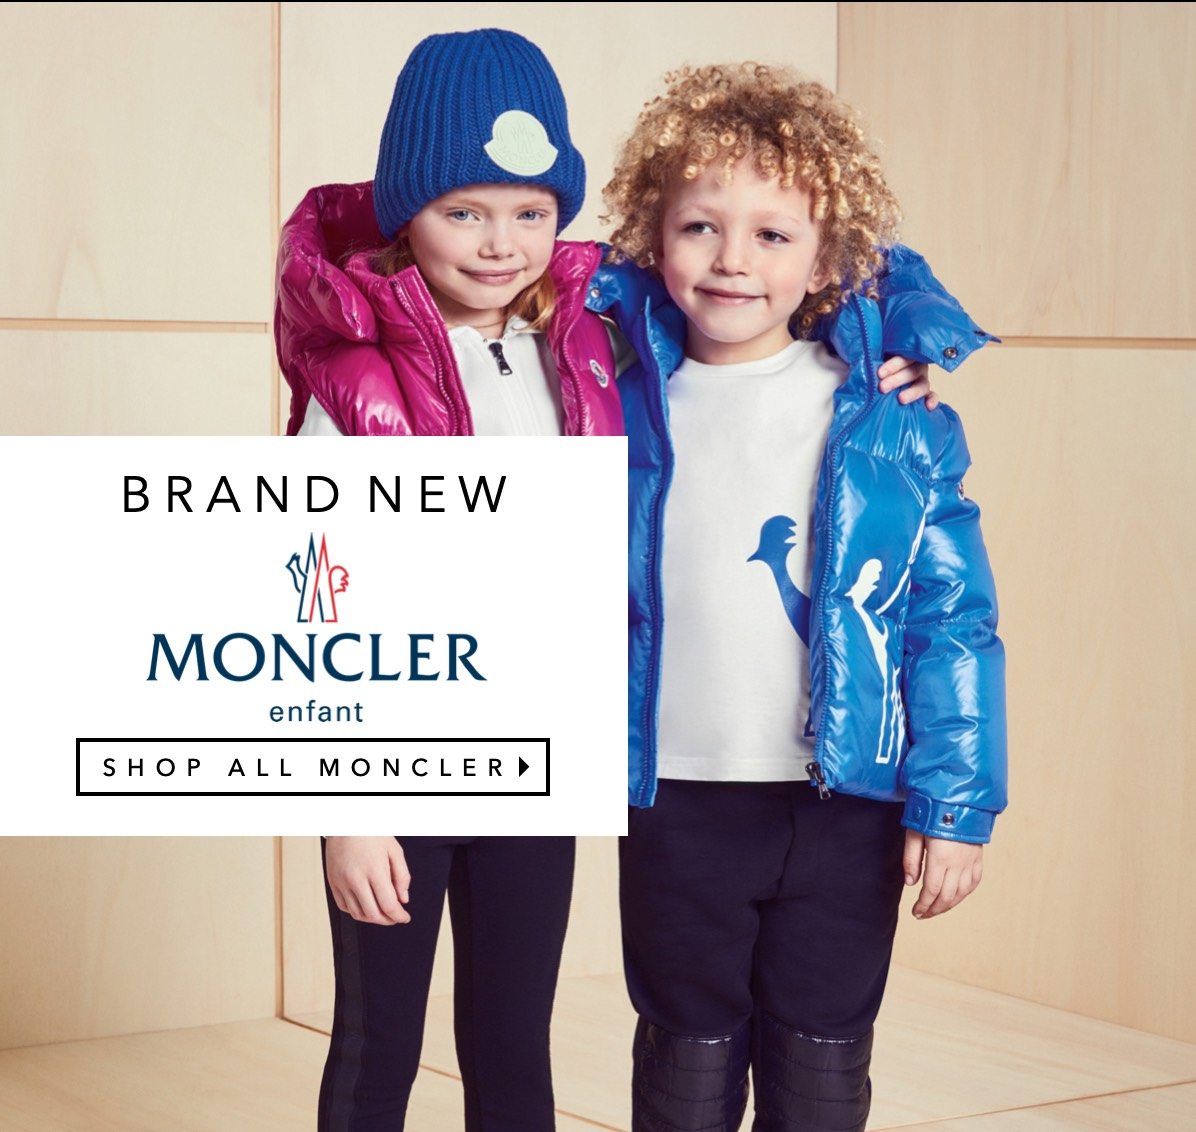 Moncler - Childsplay Clothing 